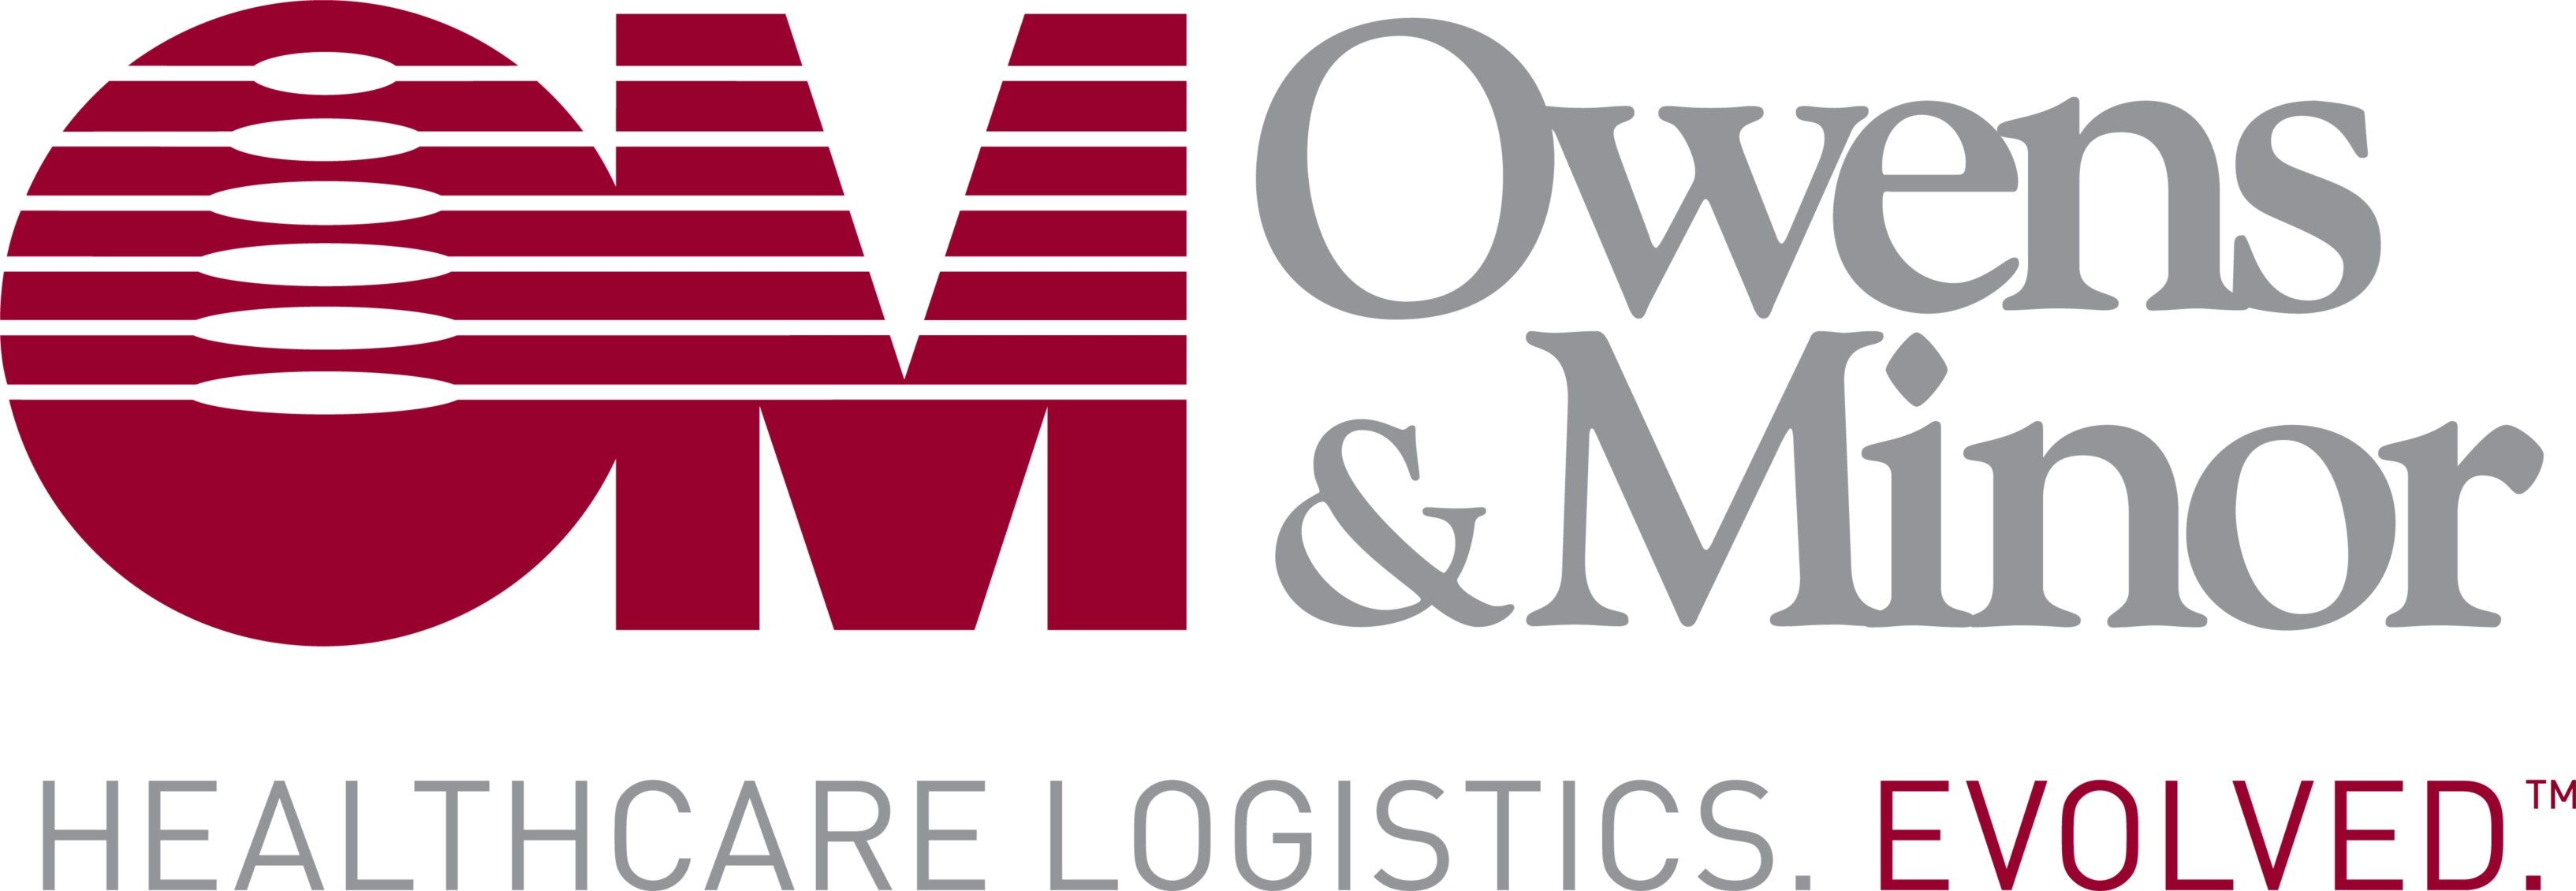 Owens & Minor, Inc. logo